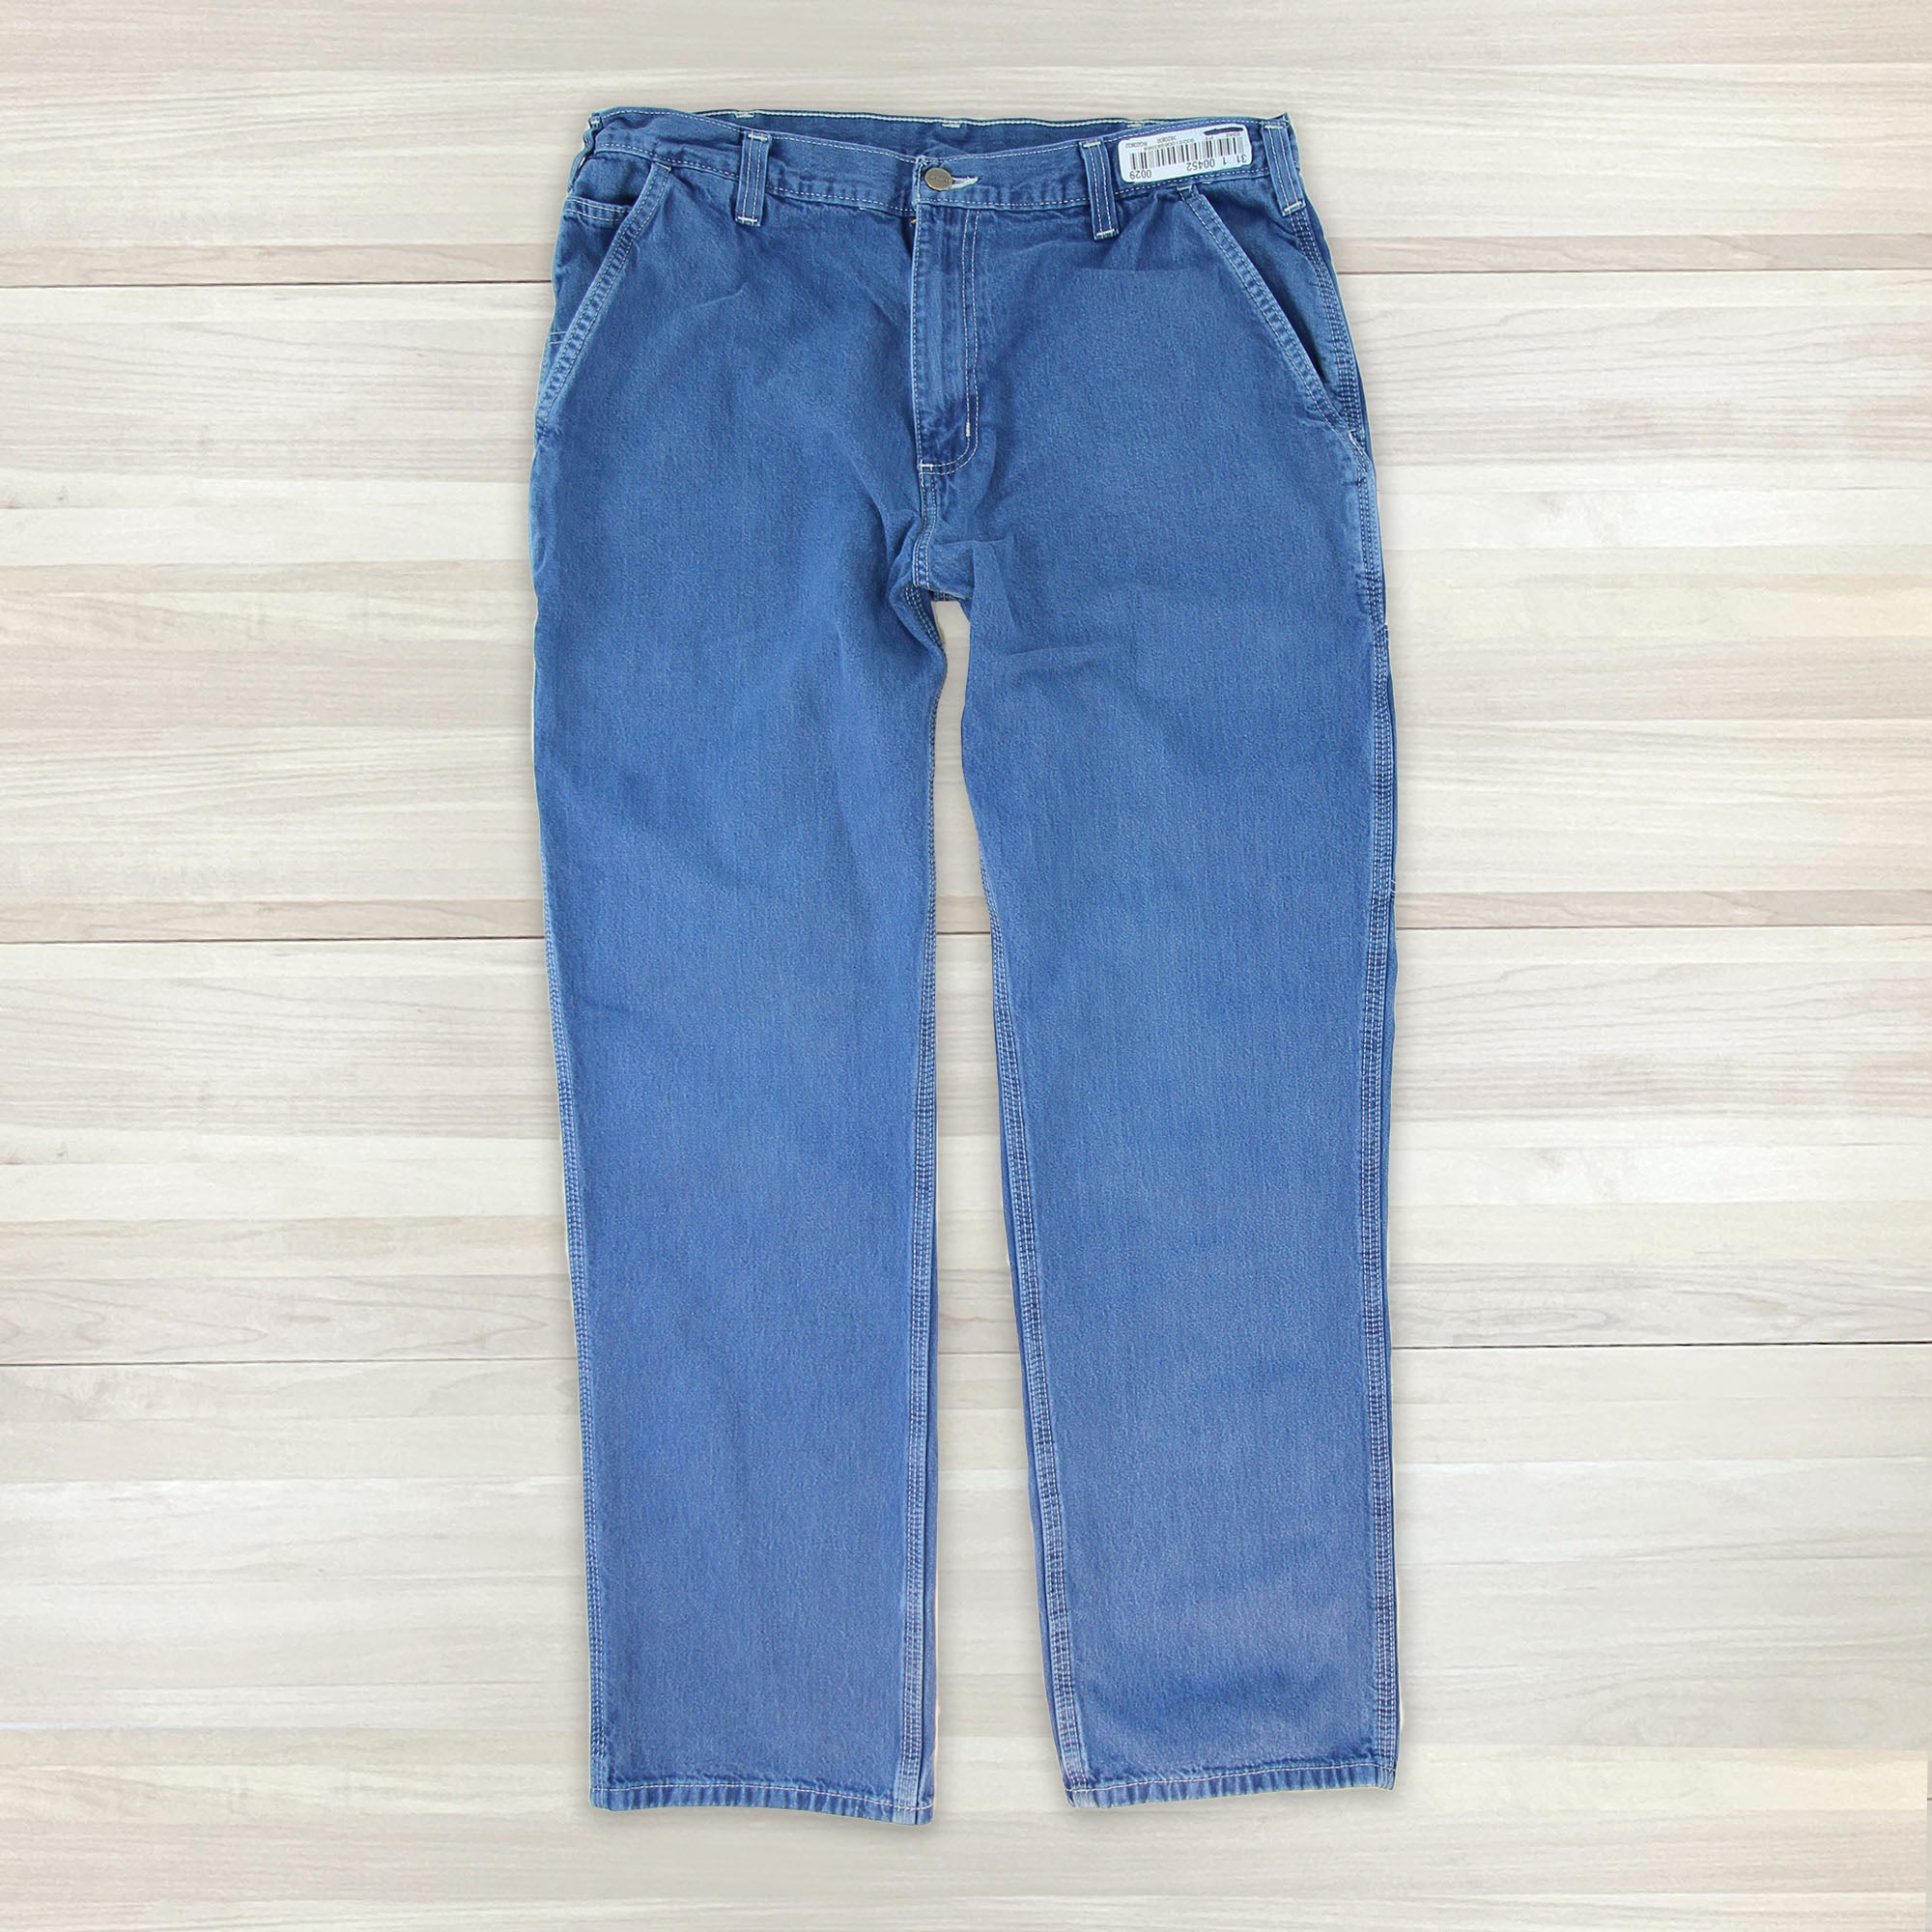 Men's Carhartt Dungaree Fit Carpenter Work Jeans - 36x32